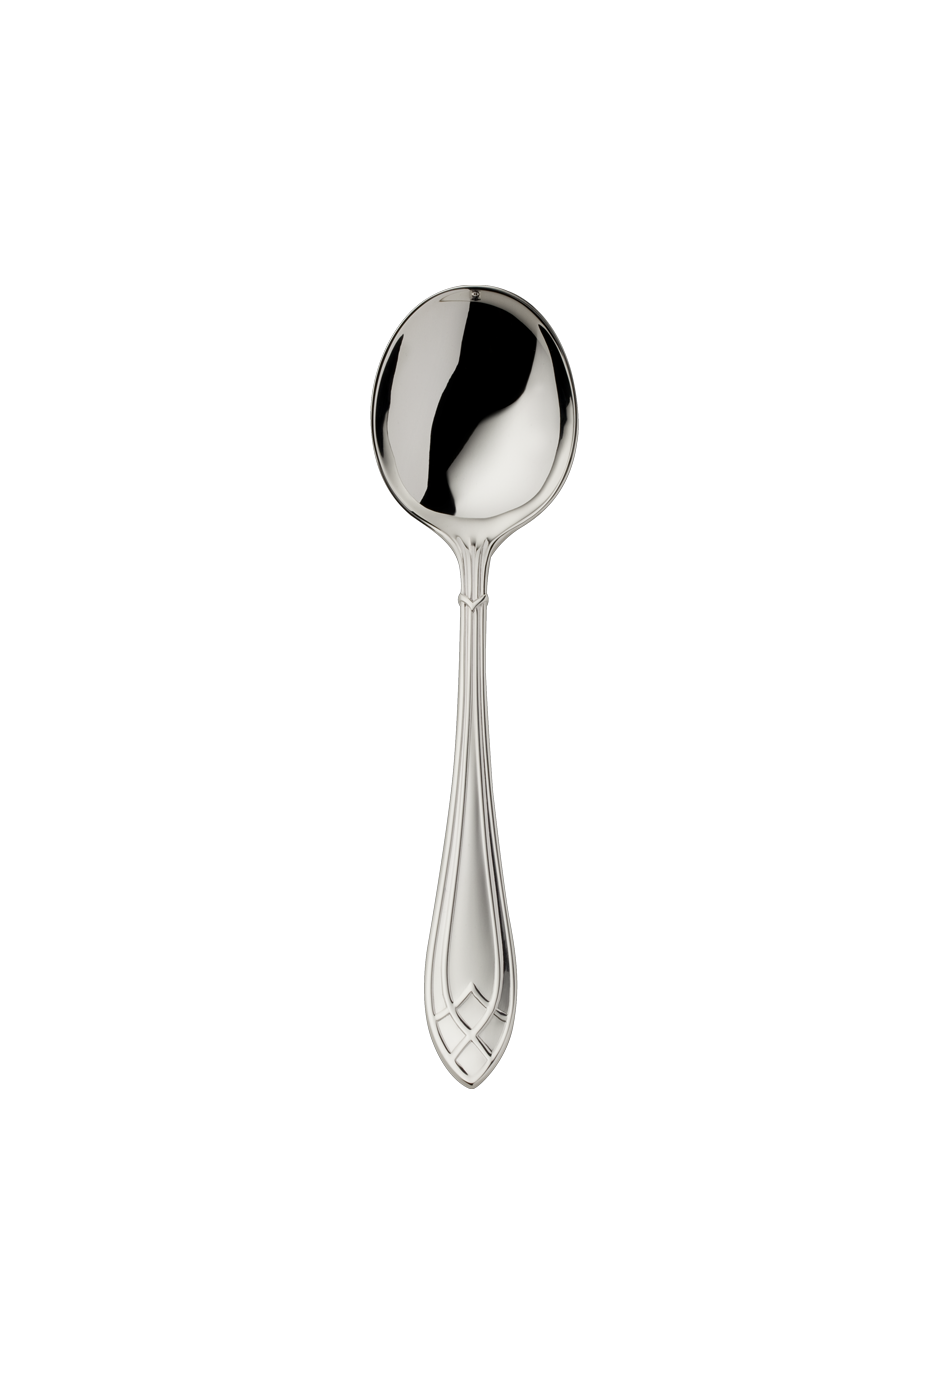 Arcade Cream Spoon (Broth Spoon) (150g massive silverplated)